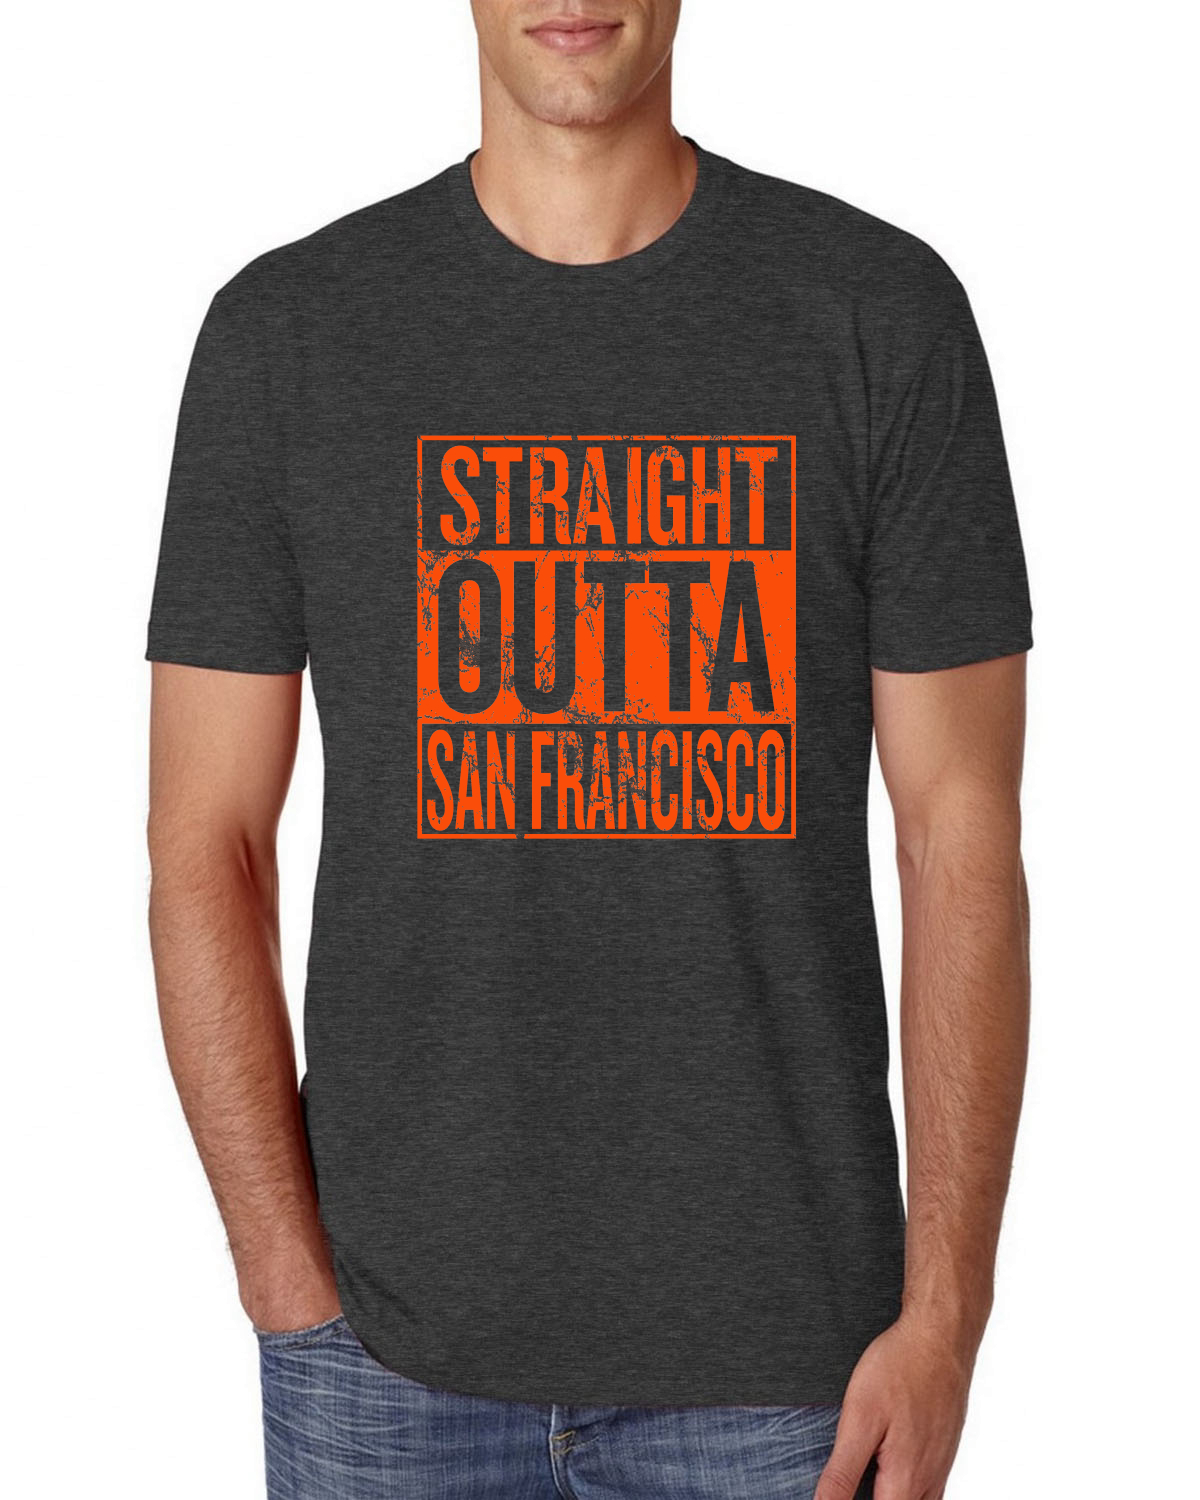 Straight Outta San Francisco SF Fan | Fantasy Baseball Fans | Mens Sports Premium Tri Blend T-Shirt, Vintage Black, X-Large - image 1 of 4